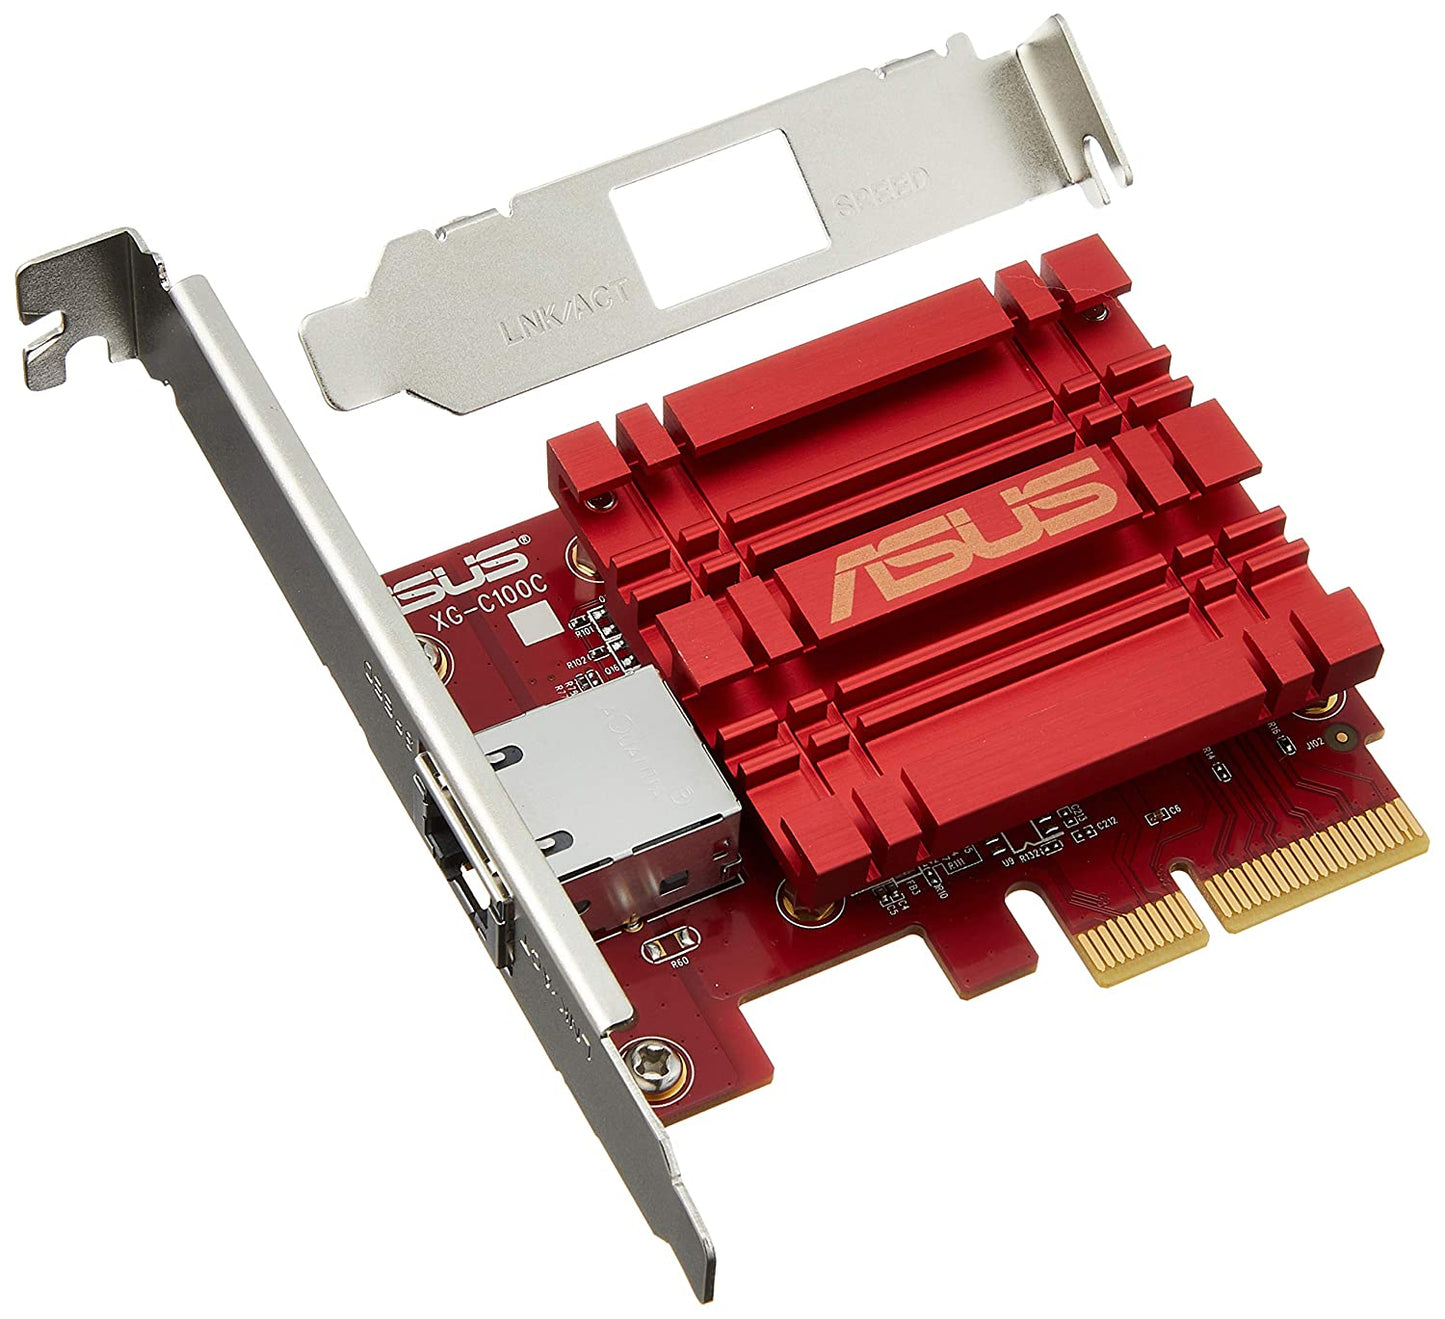 ASUS XG-C100C 10G Network Adapter PCI-E x4 Card with Single RJ-45 Port (XG-C100C)